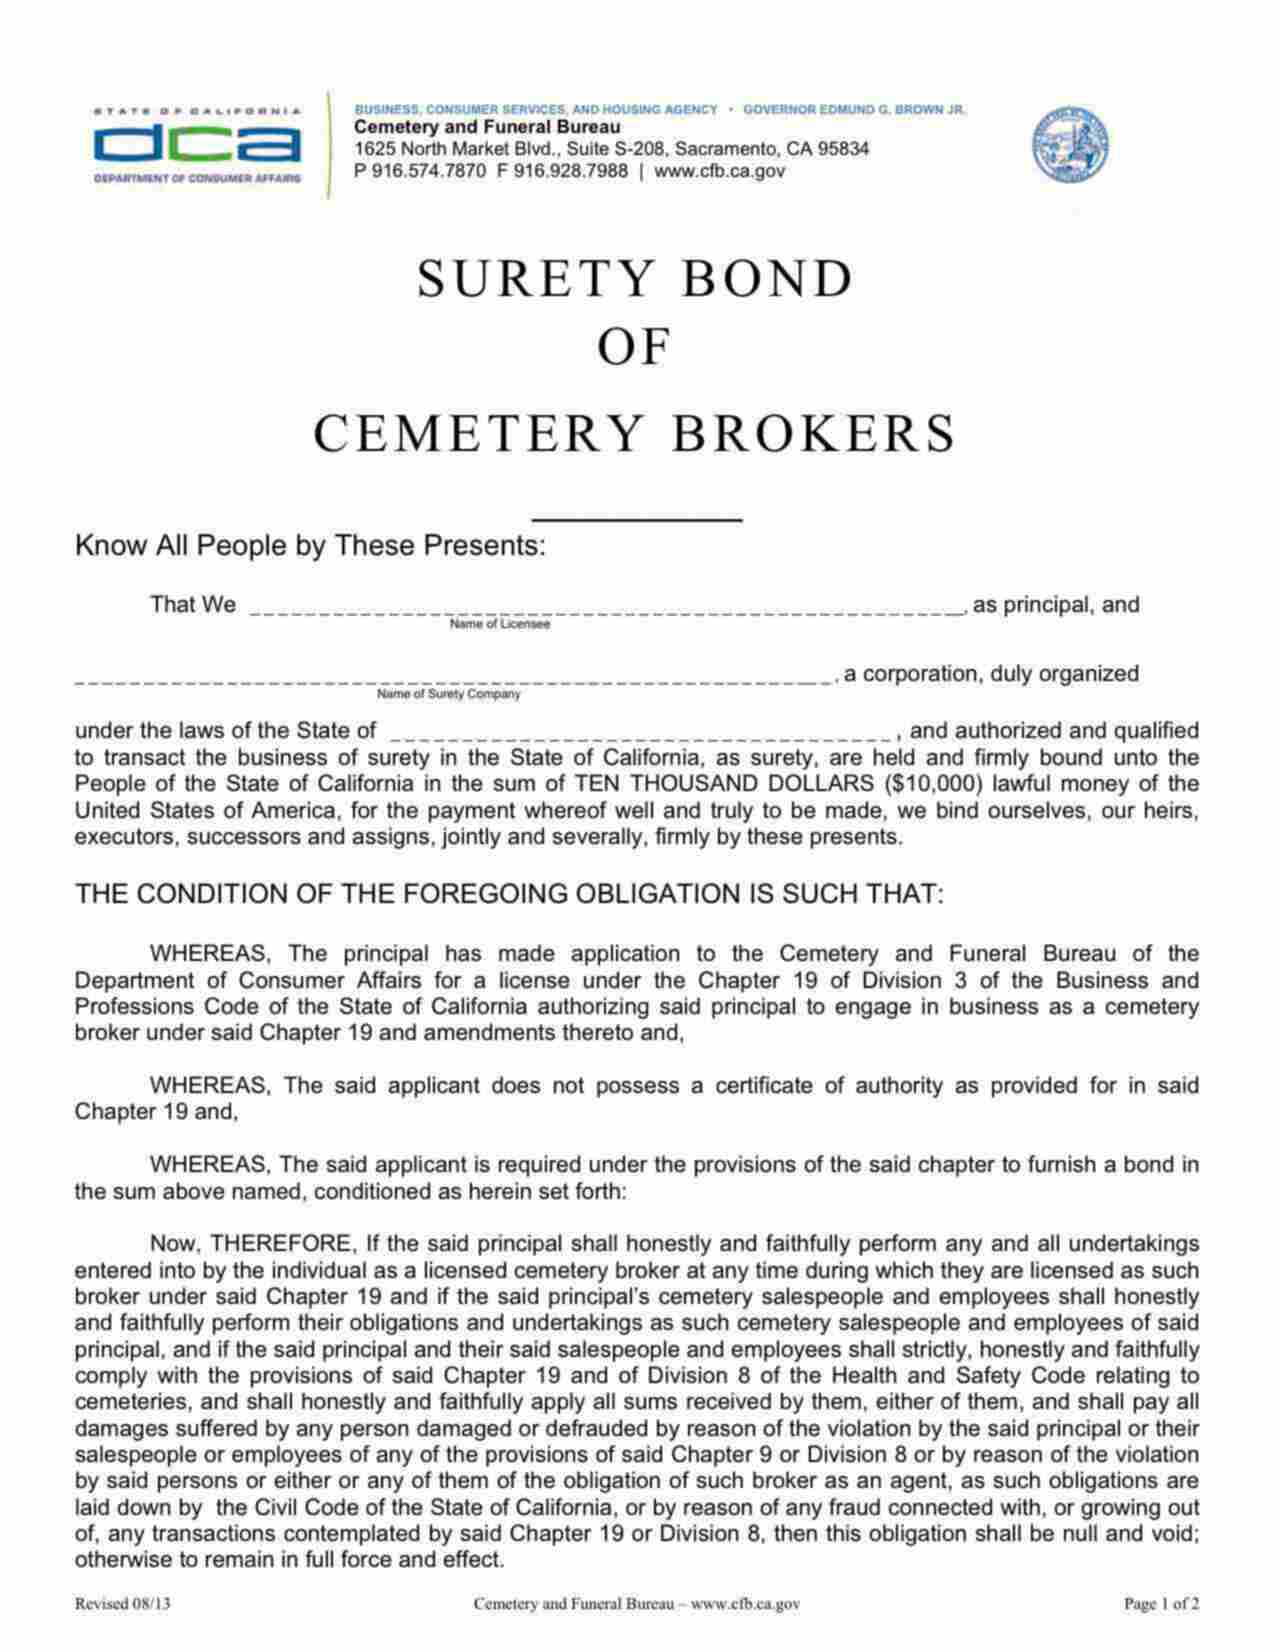 California Cemetery Brokers Bond Form